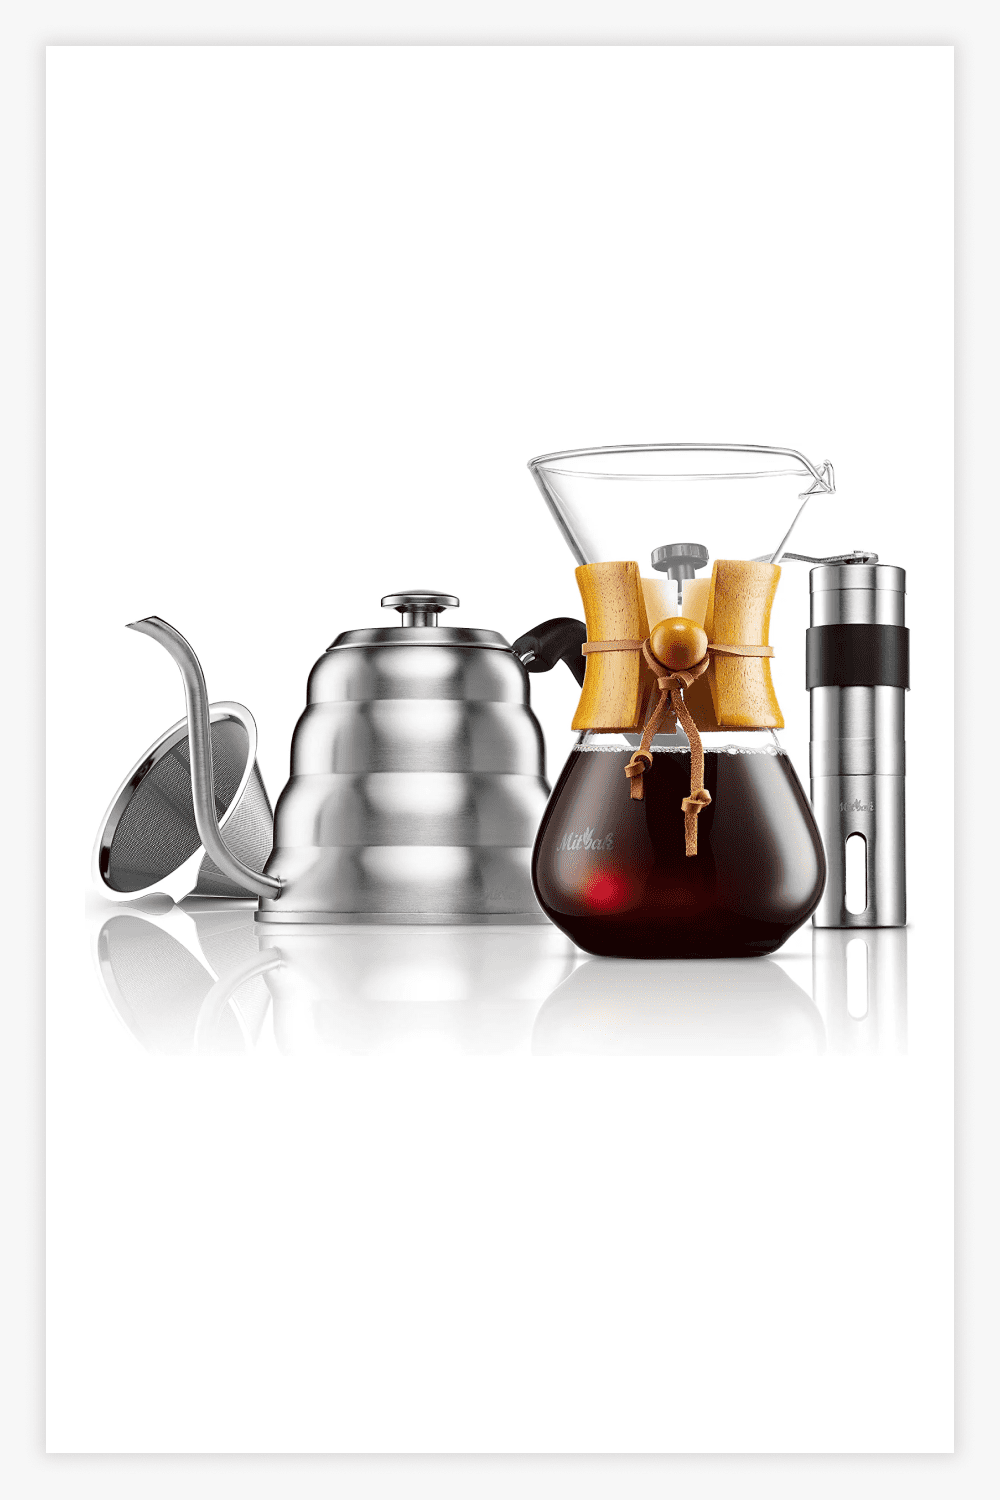 MITBAK Pour Over Coffee Maker Set .